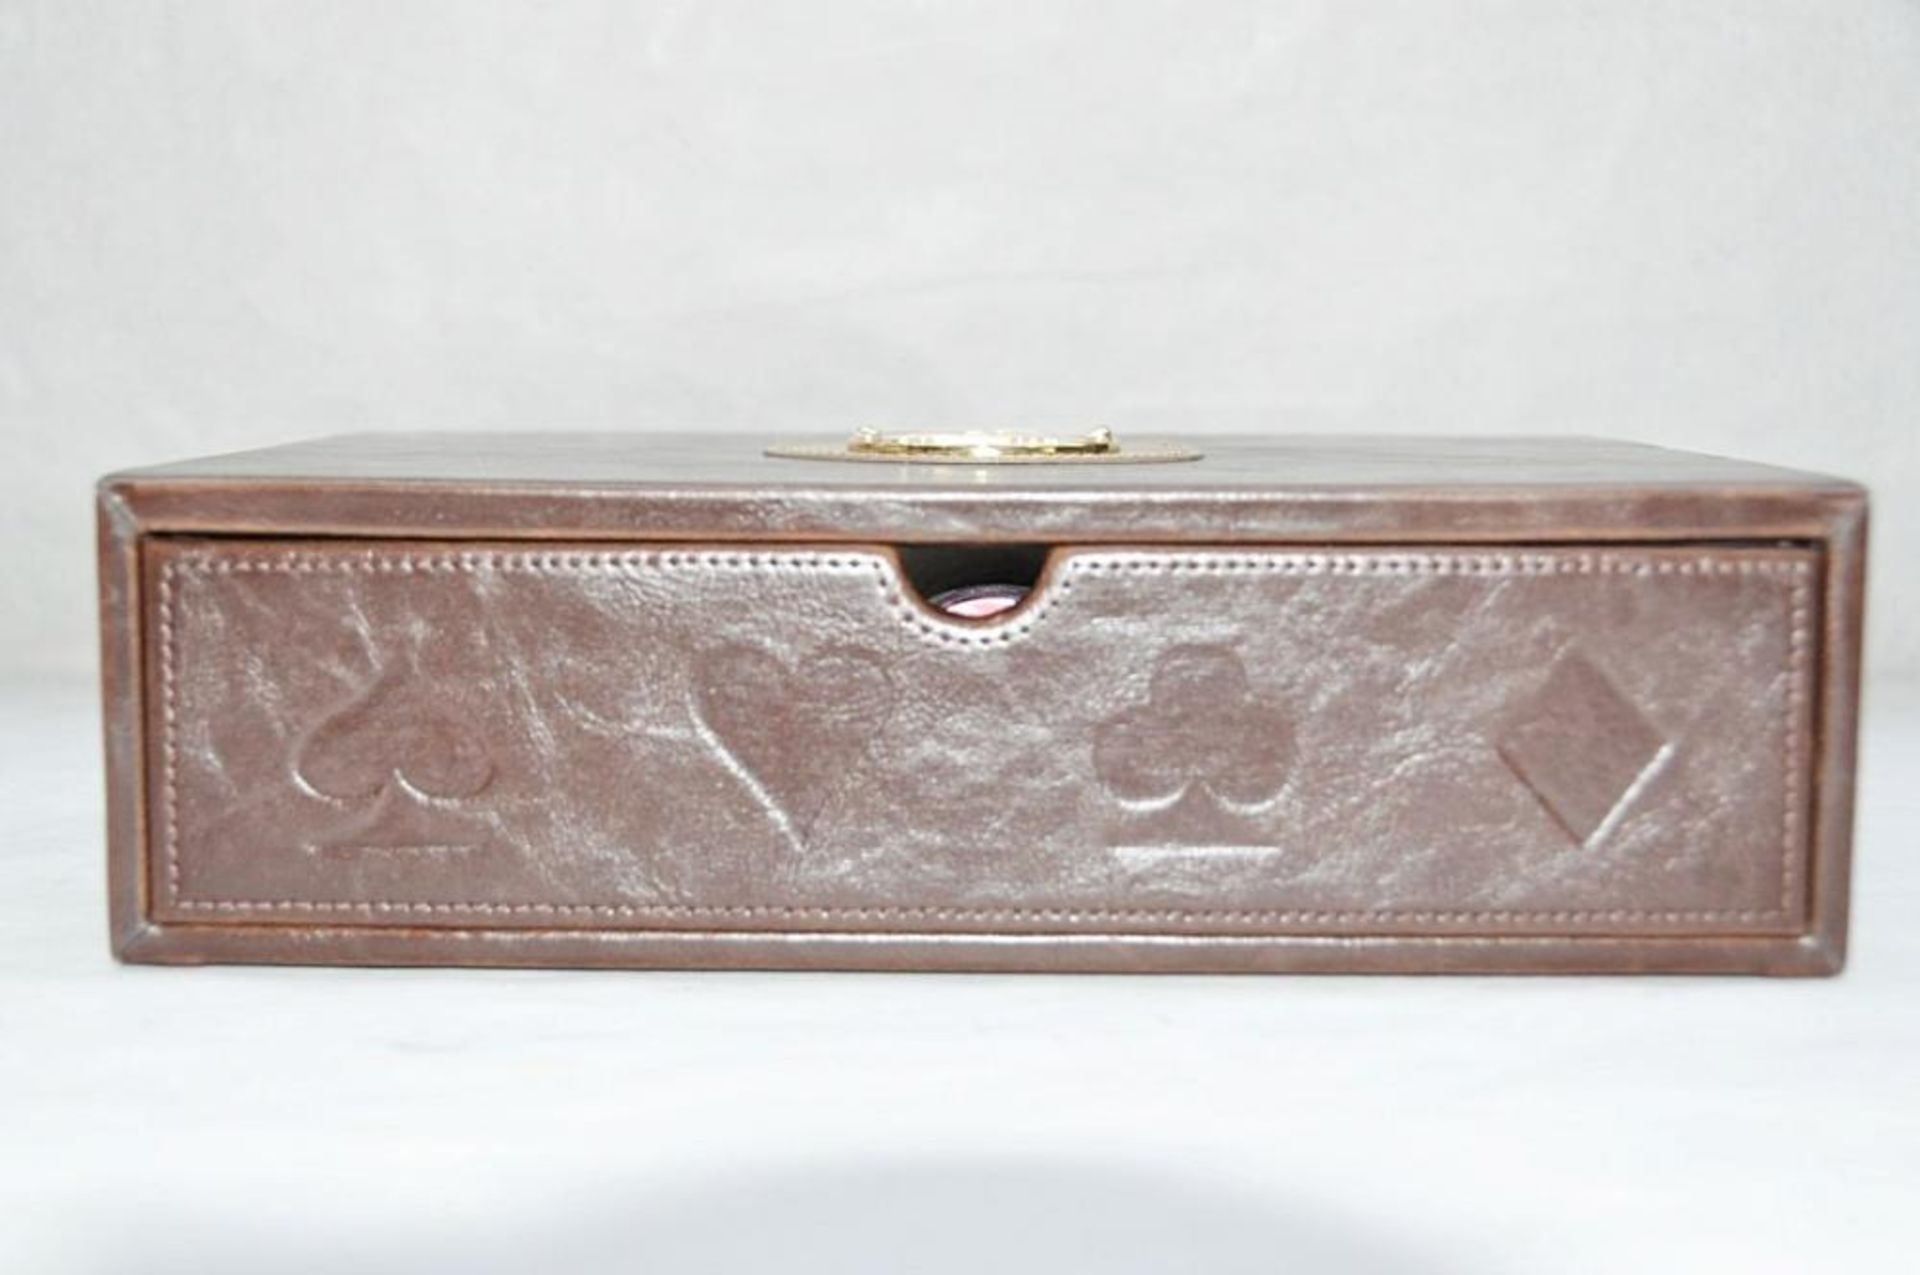 1 x "AB Collezioni" Italian Genuine Leather-Bound Luxury POKER SET (34048) - Features Beautiful - Image 8 of 8